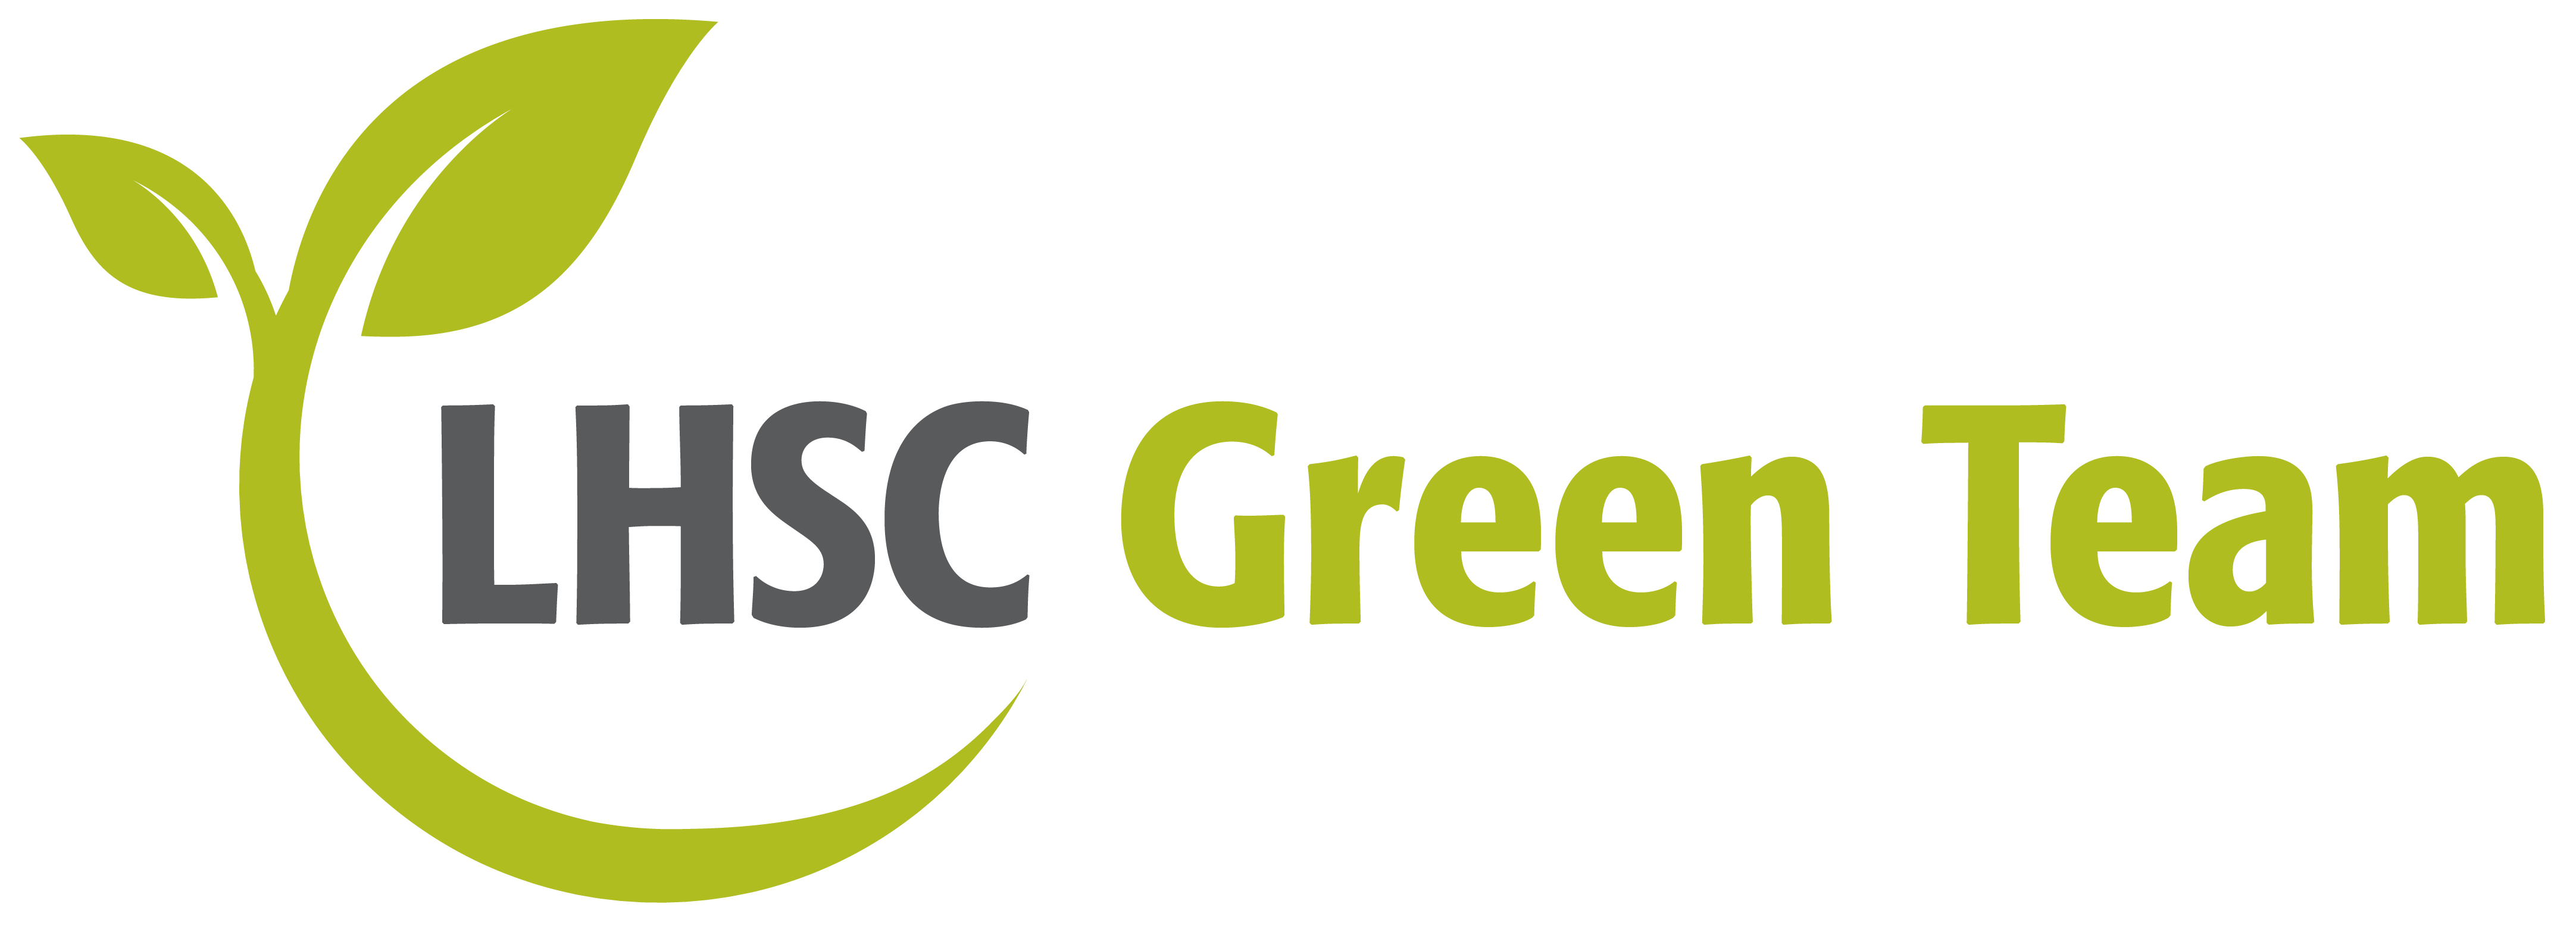 The LHSC Green Team logo